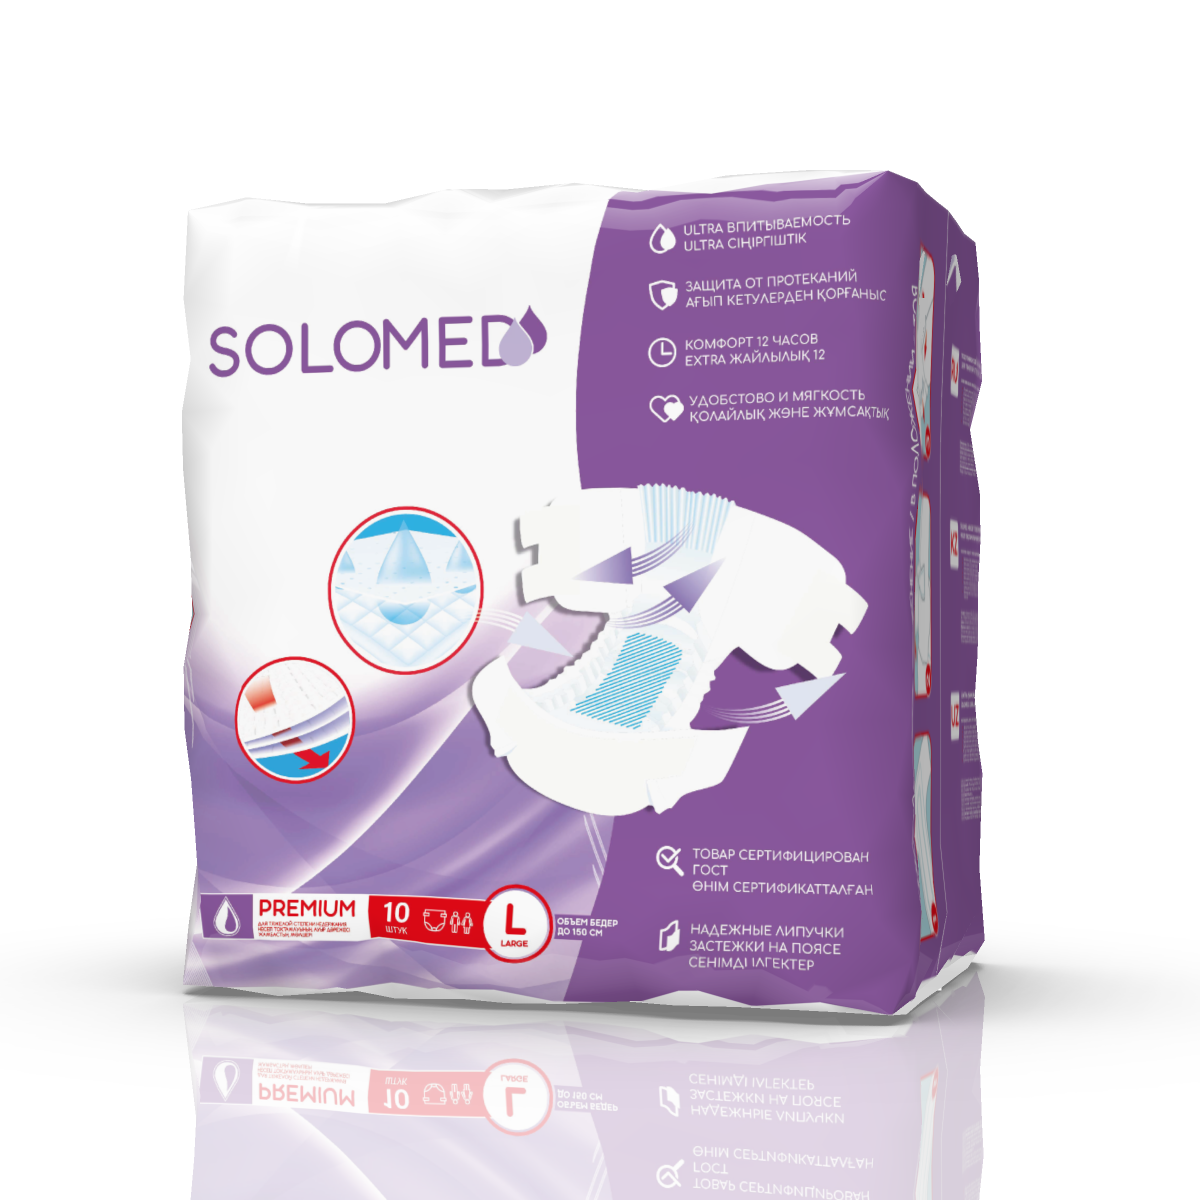 Solomed Premium, подгузники для взрослых (размер L), 10 шт. полотенце для ног zen blue размер 50х70 см синий